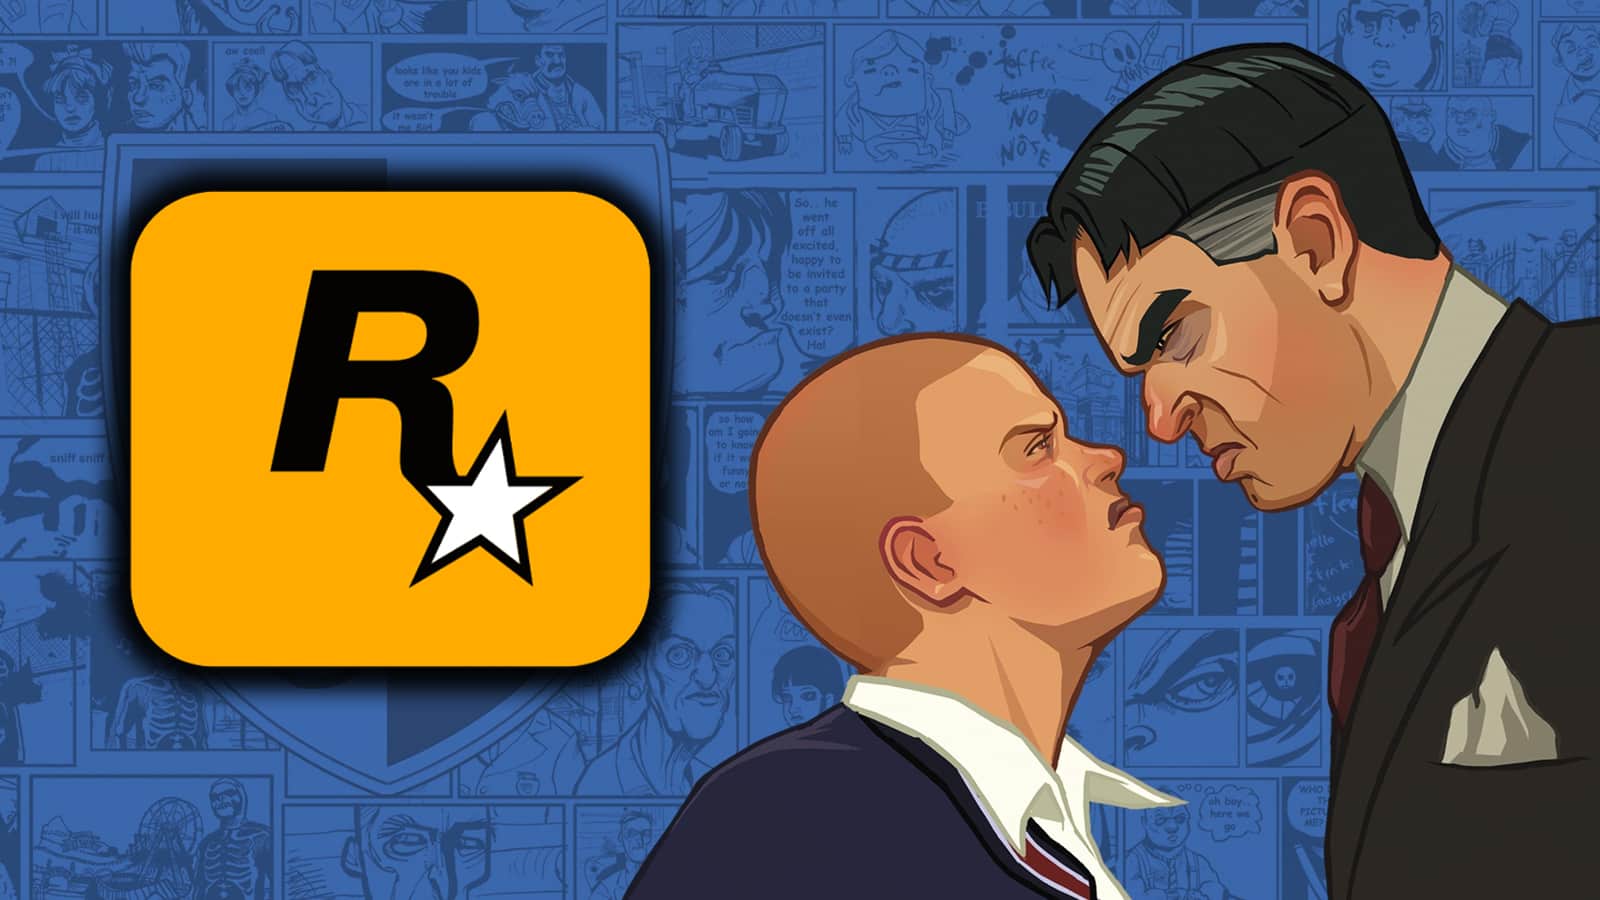 Rockstar fuel Bully 2 rumors as classic logo makes return - Dexerto